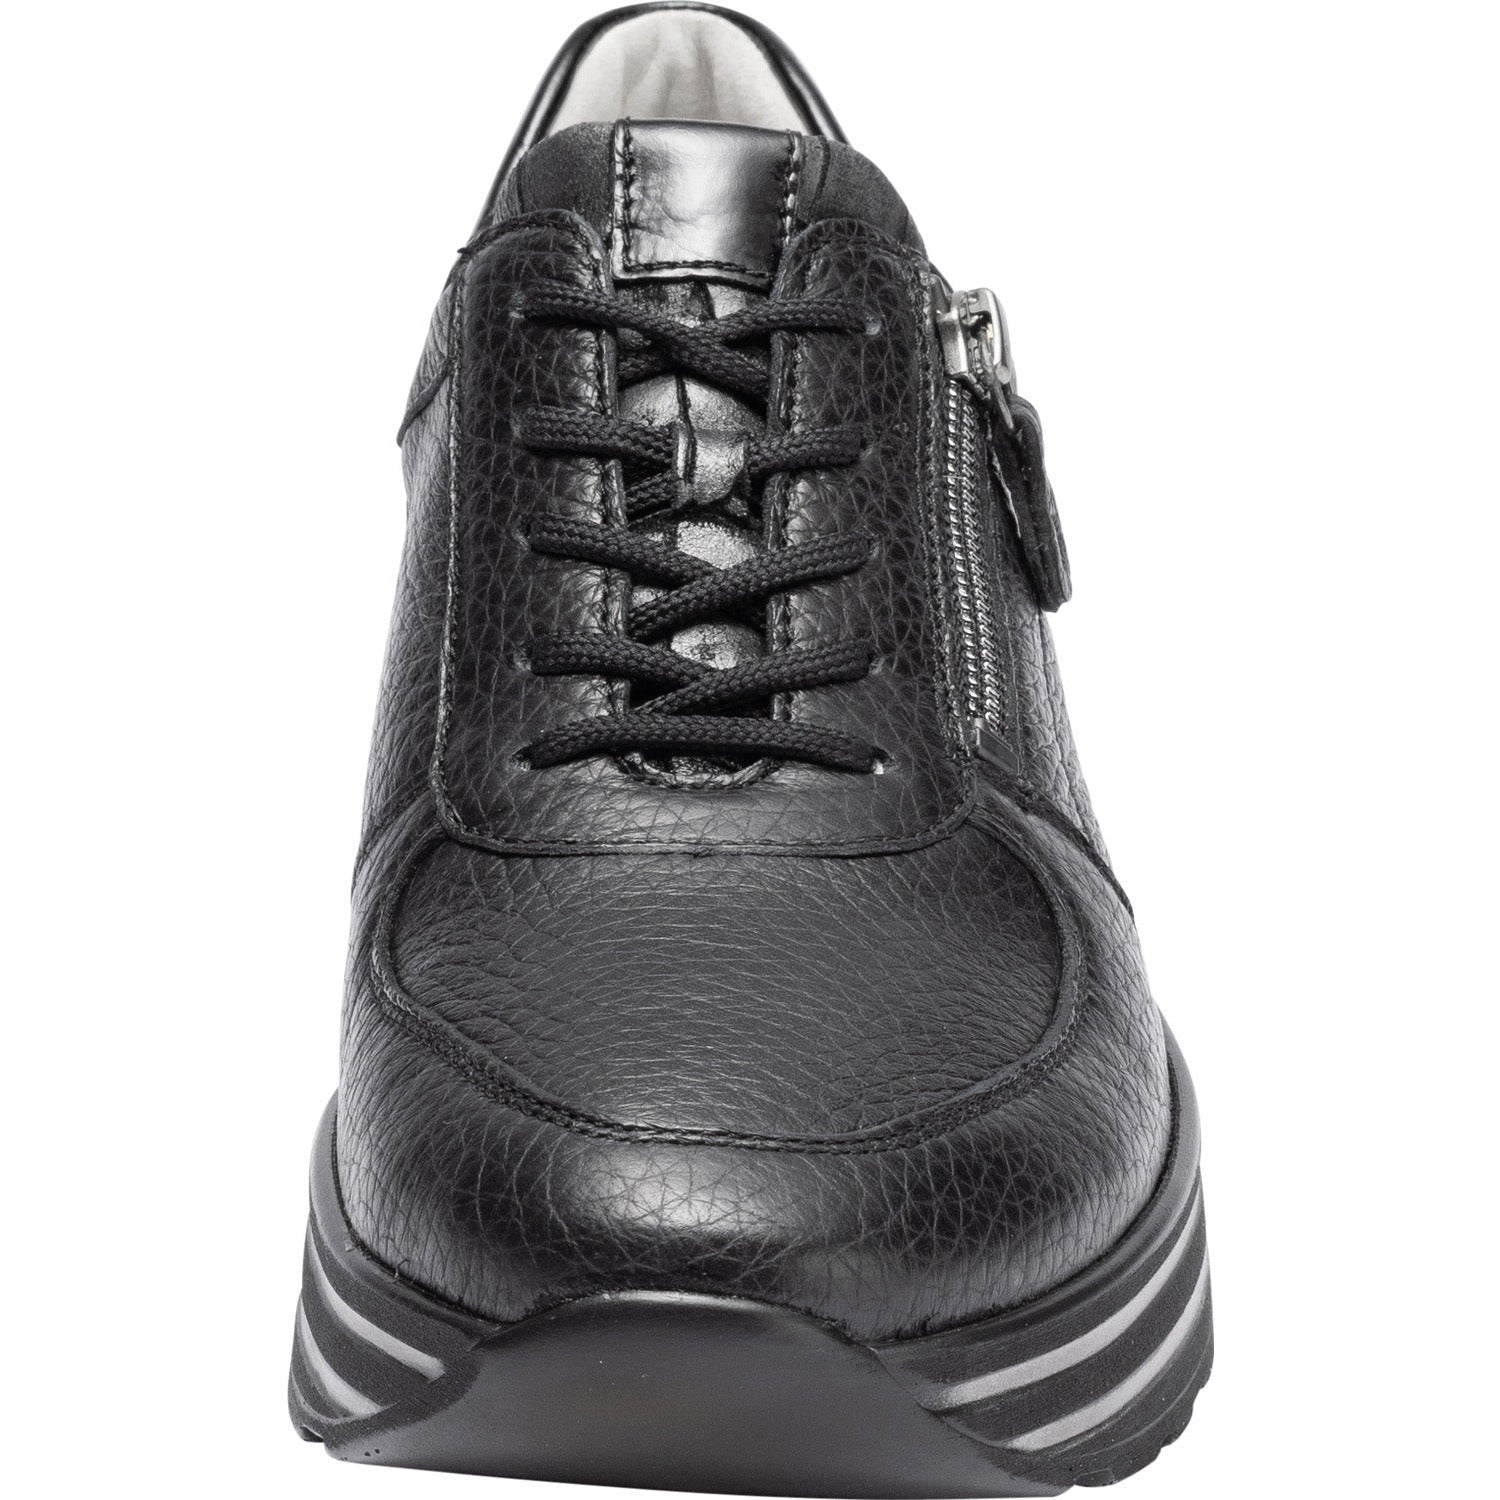 Waldlaufer H-Lana(758009) - Ladies lace with zip Shoe in Black. Waldlaufer  | Wide Fit Shoes | Wisemans | Bantry | West Cork | Ireland